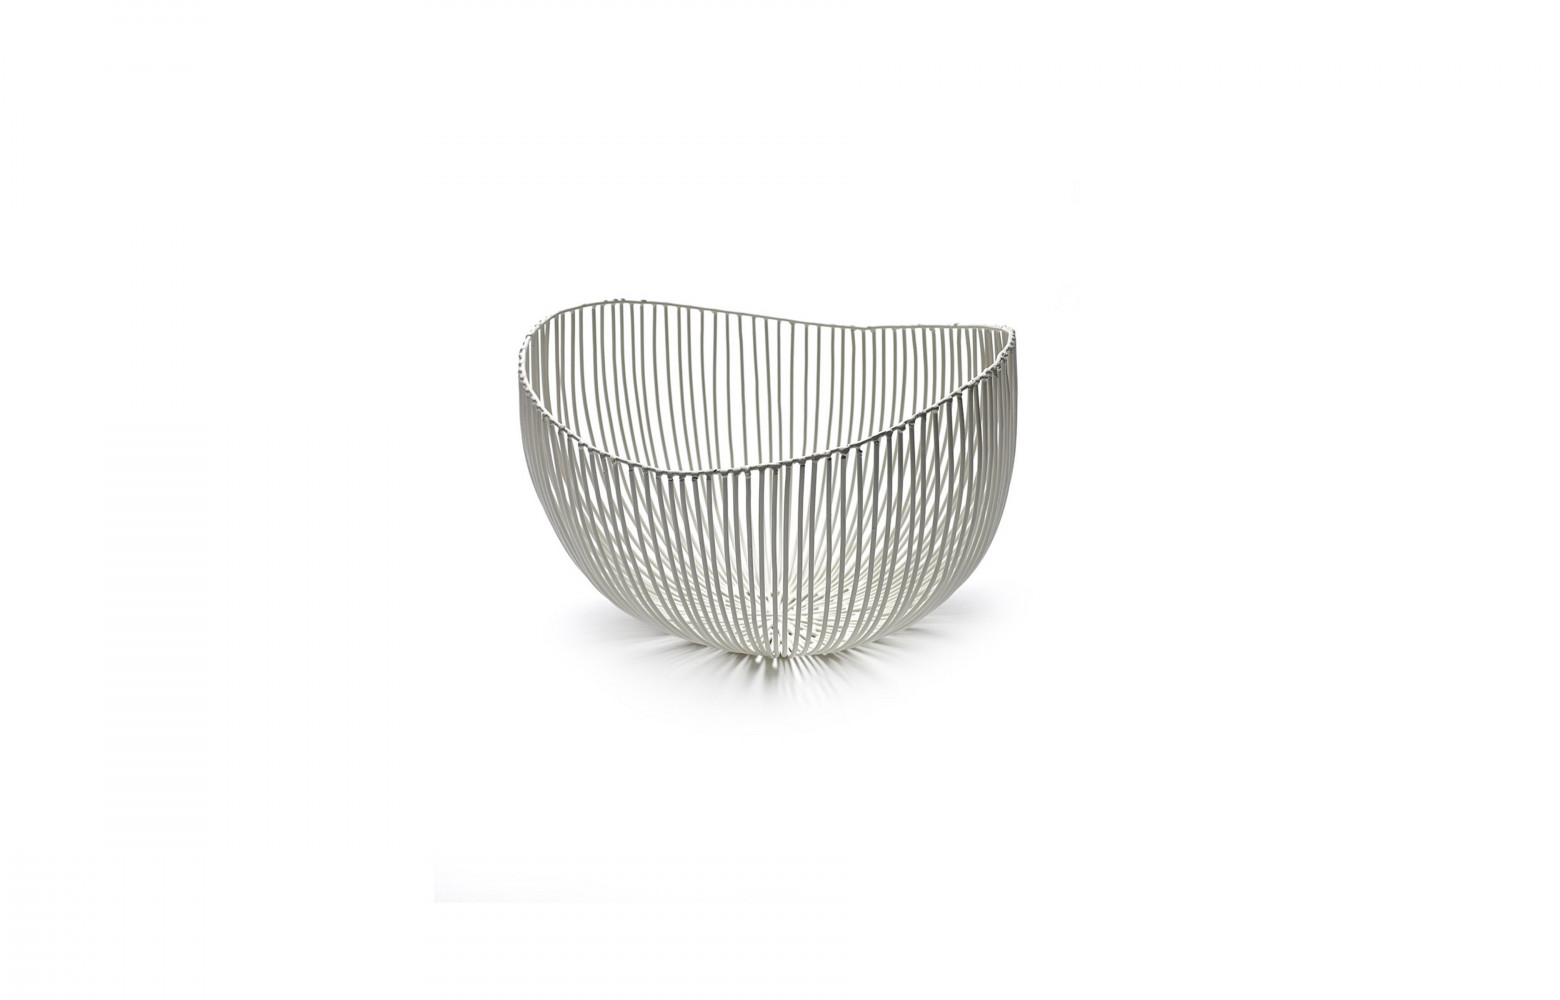 Corbeille ovale Tale en métal, design Antonino Sciortino, 76,90 €. Serax chez Fleux.